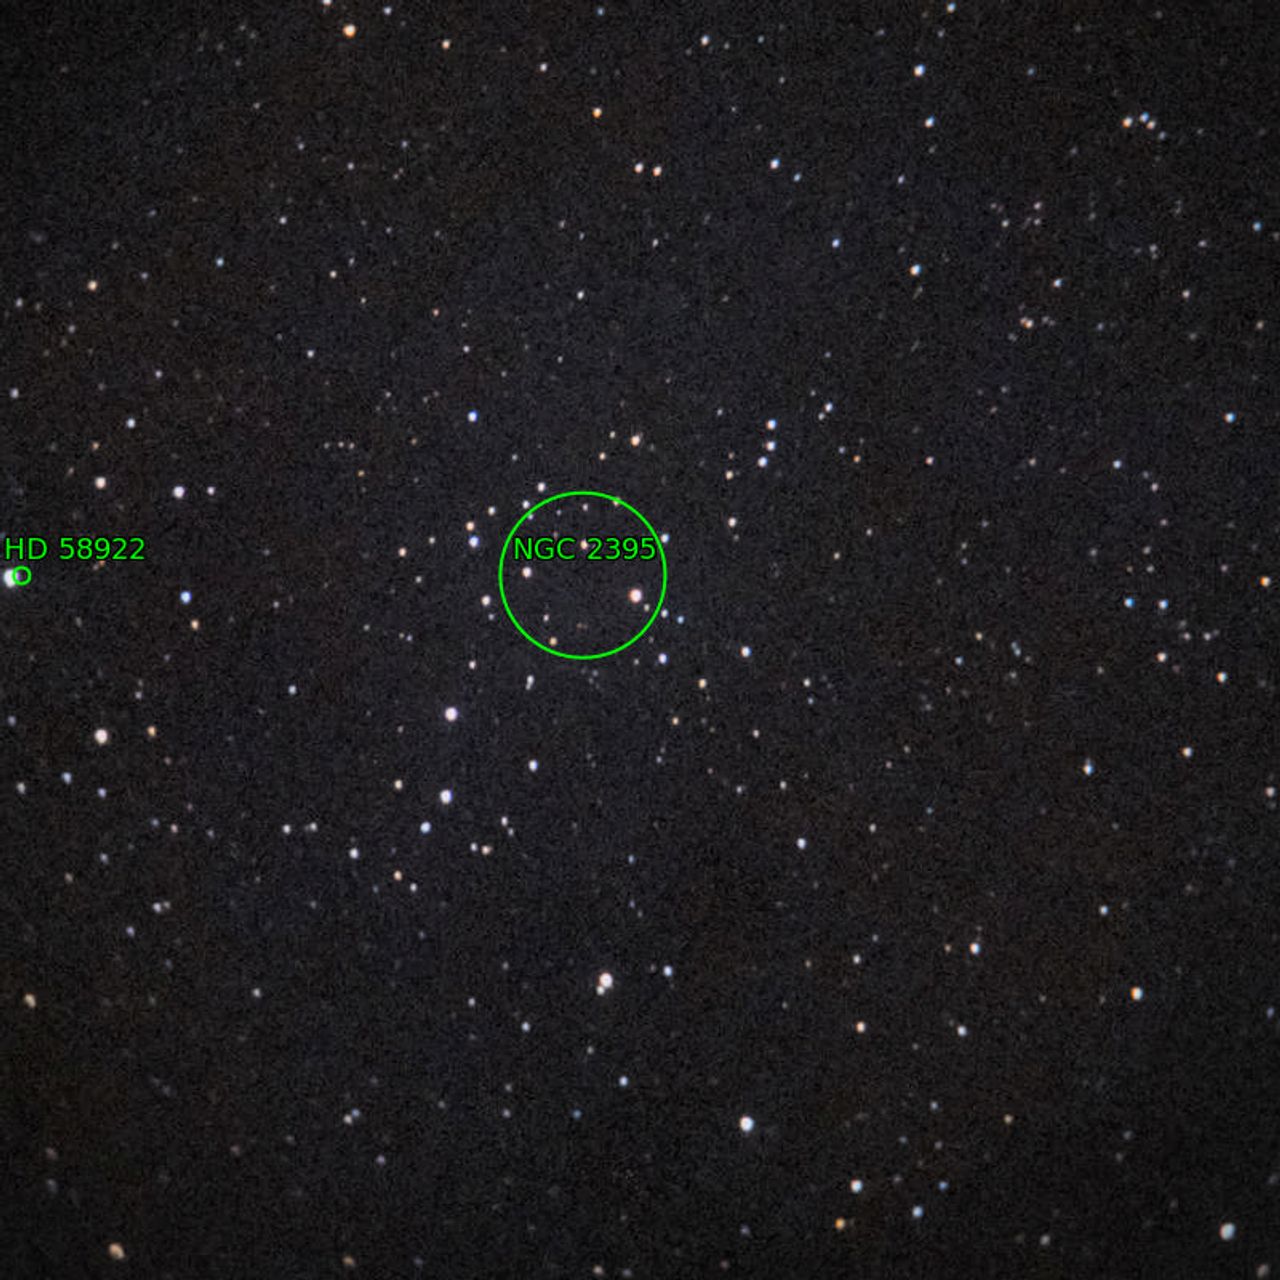 Annotation around NGC2395